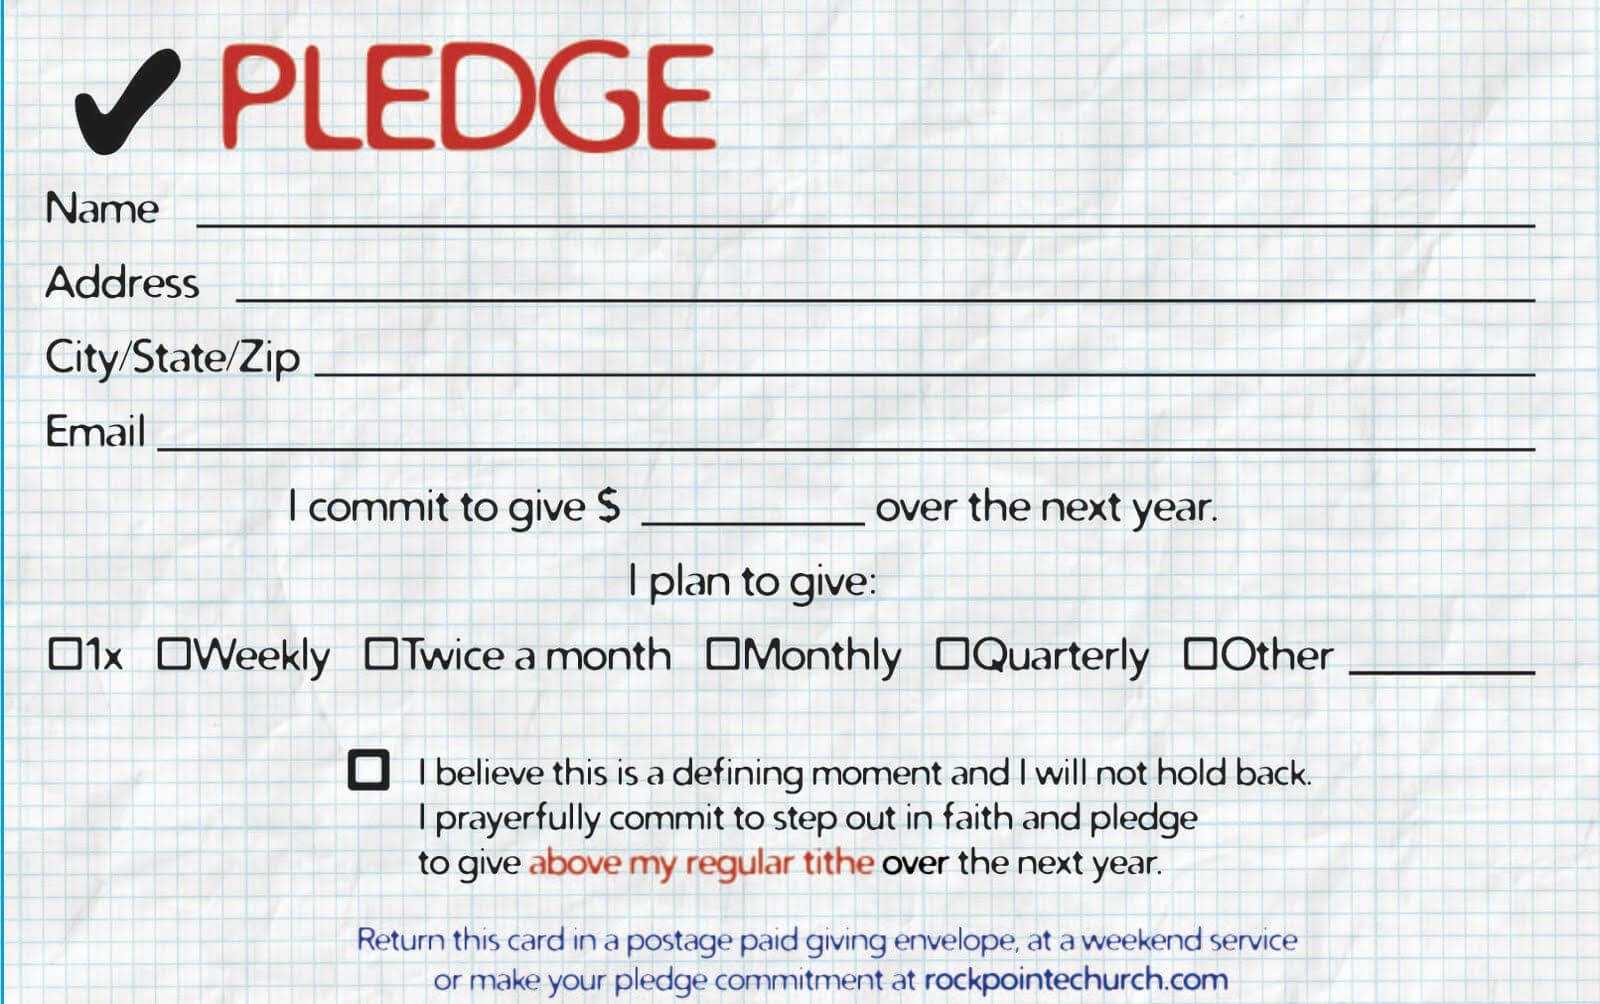 Pledge Cards For Churches | Pledge Card Templates | Card Regarding Pledge Card Template For Church